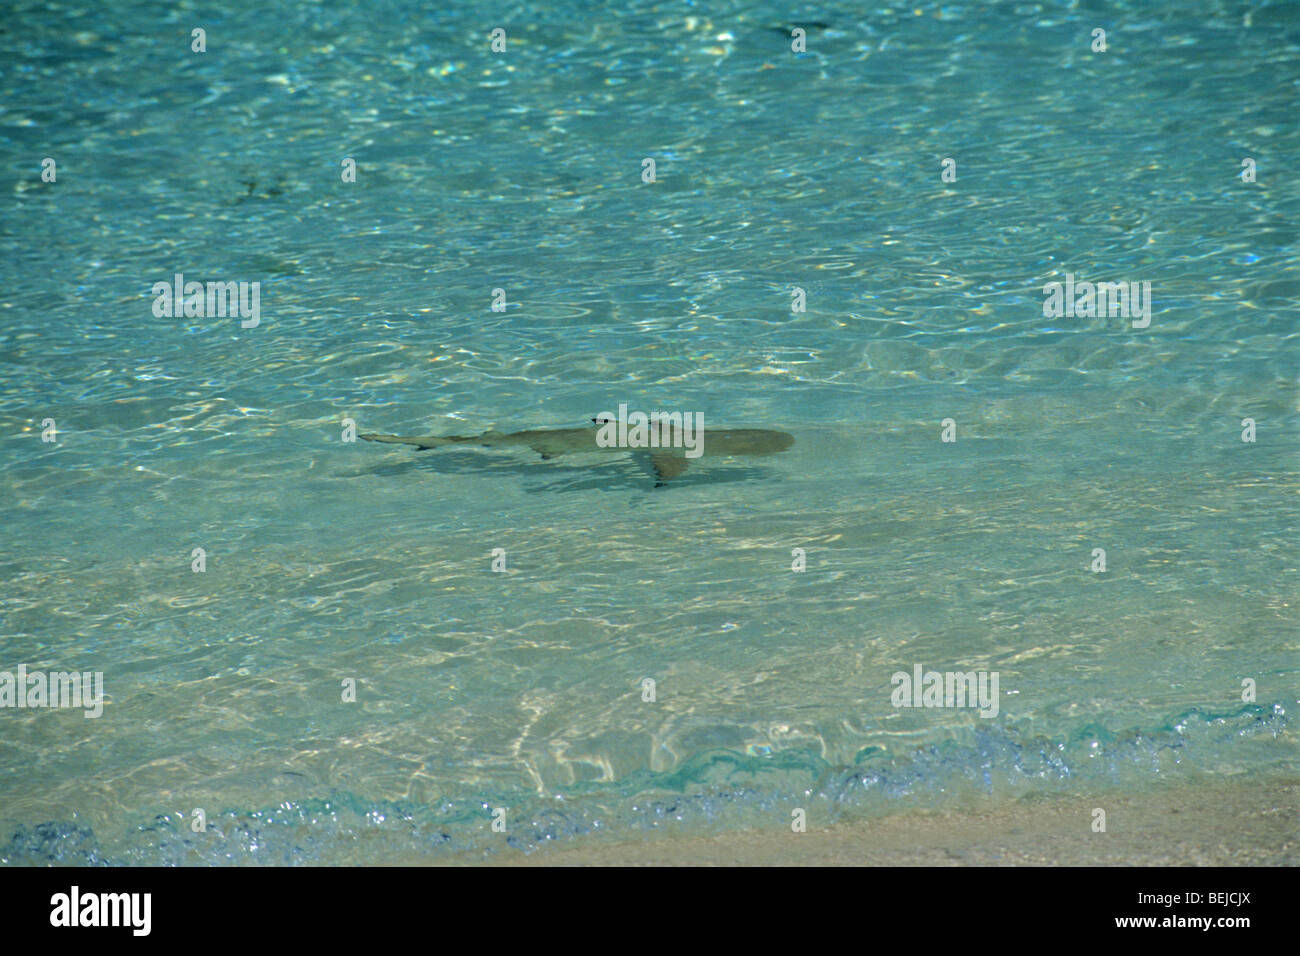 shark-farasan-island-red-sea-saudi-arabia-middle-east-BEJCJX.jpg